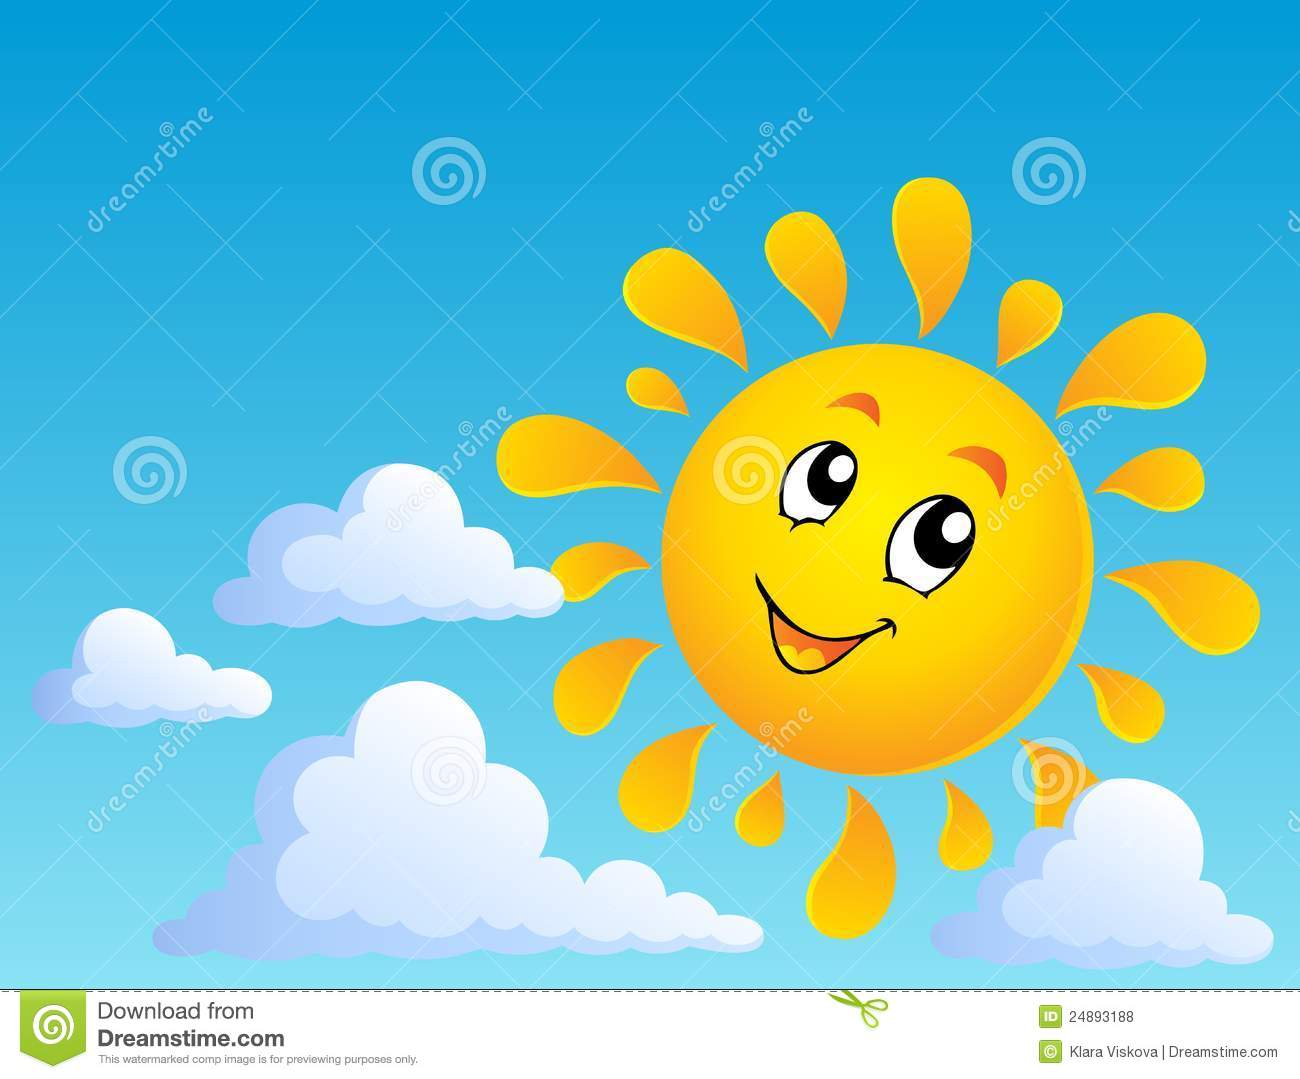 Мамочка лучик солнышка. Красивое солнышко. Солнце картинка для детей. Солнышко для детей. Солнышко улыбается.